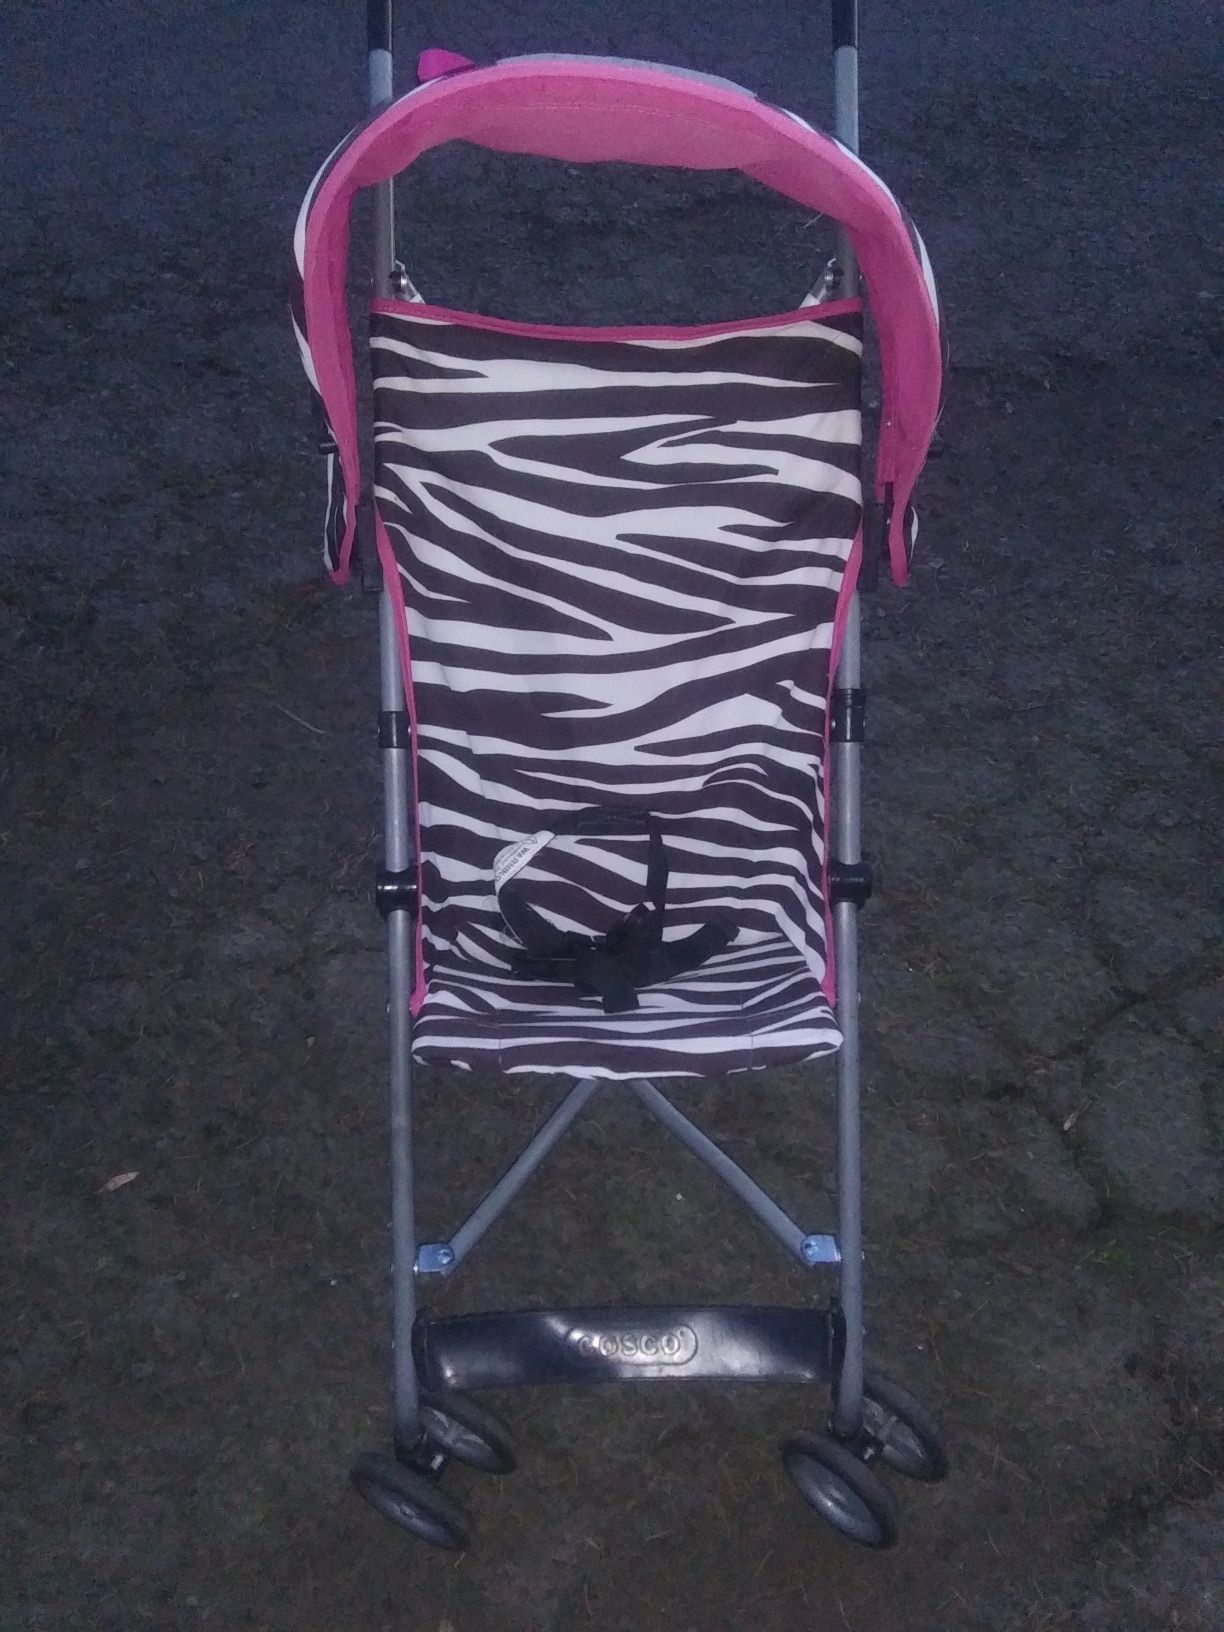 Cosco zebra stroller